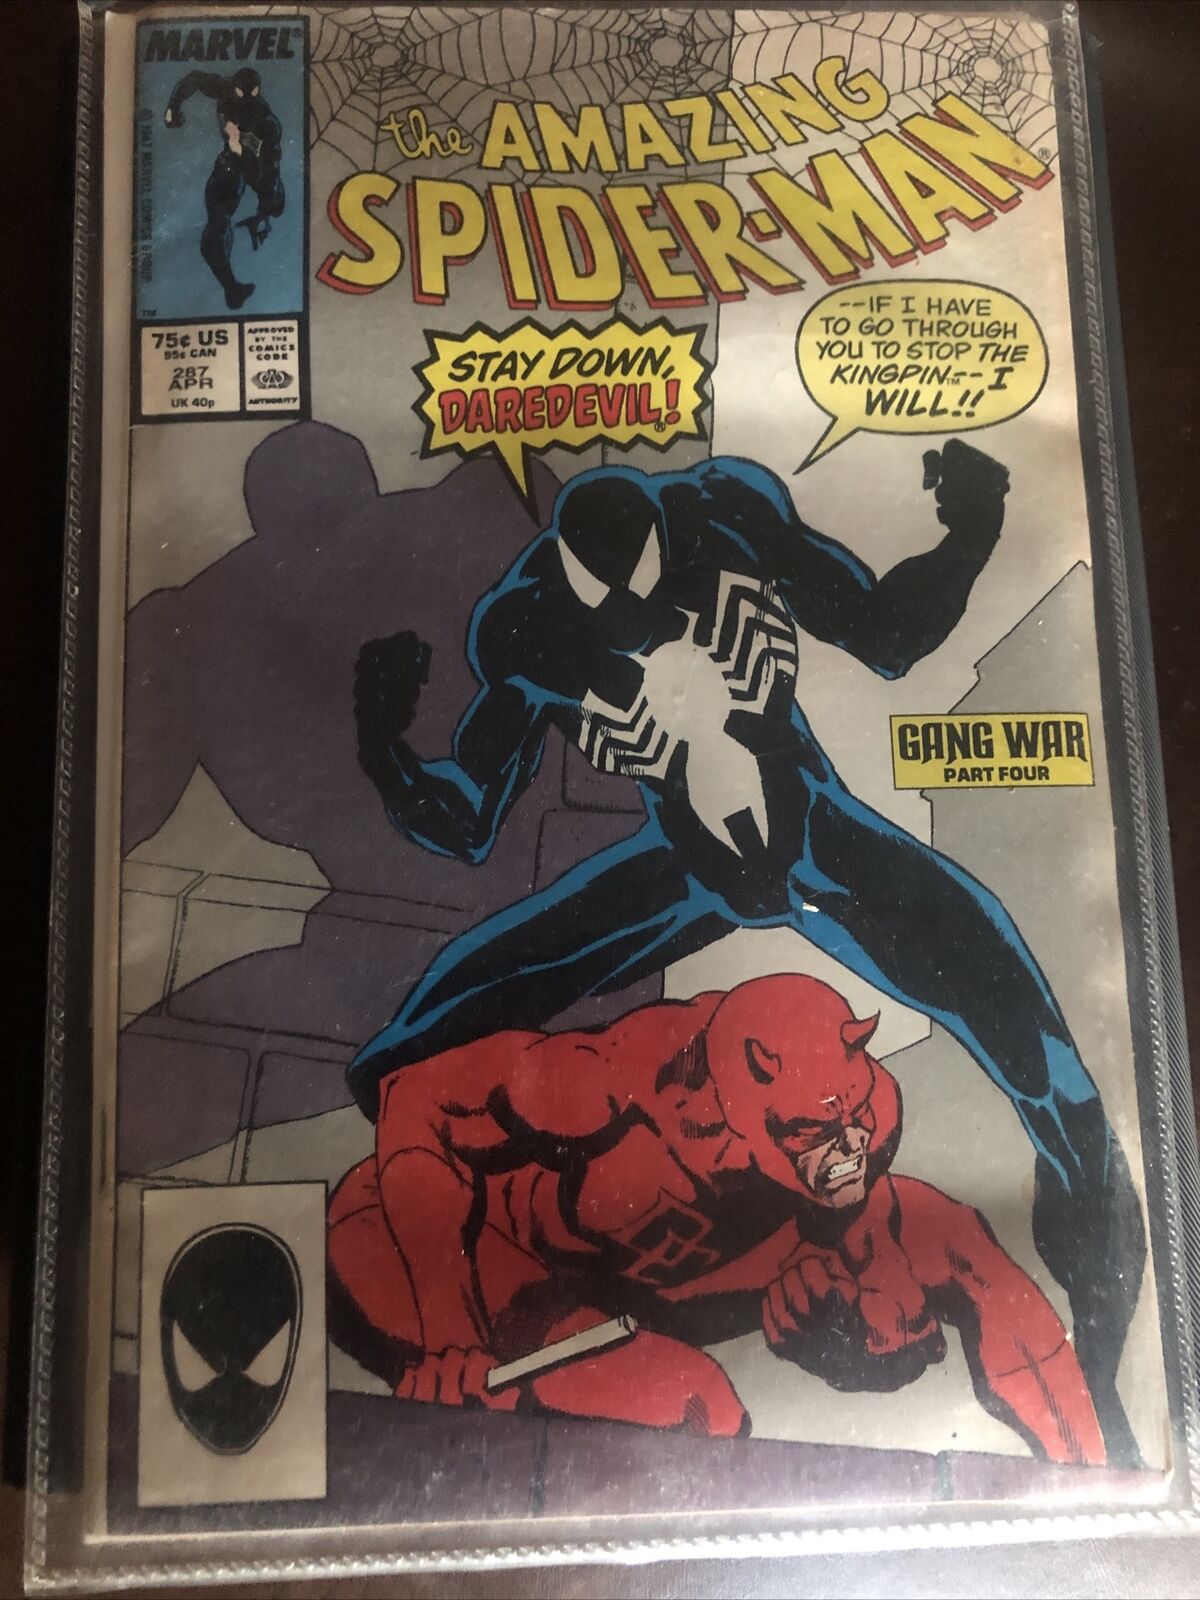 The Amazing Spider-Man #287 Apr 1987 Copy 1 